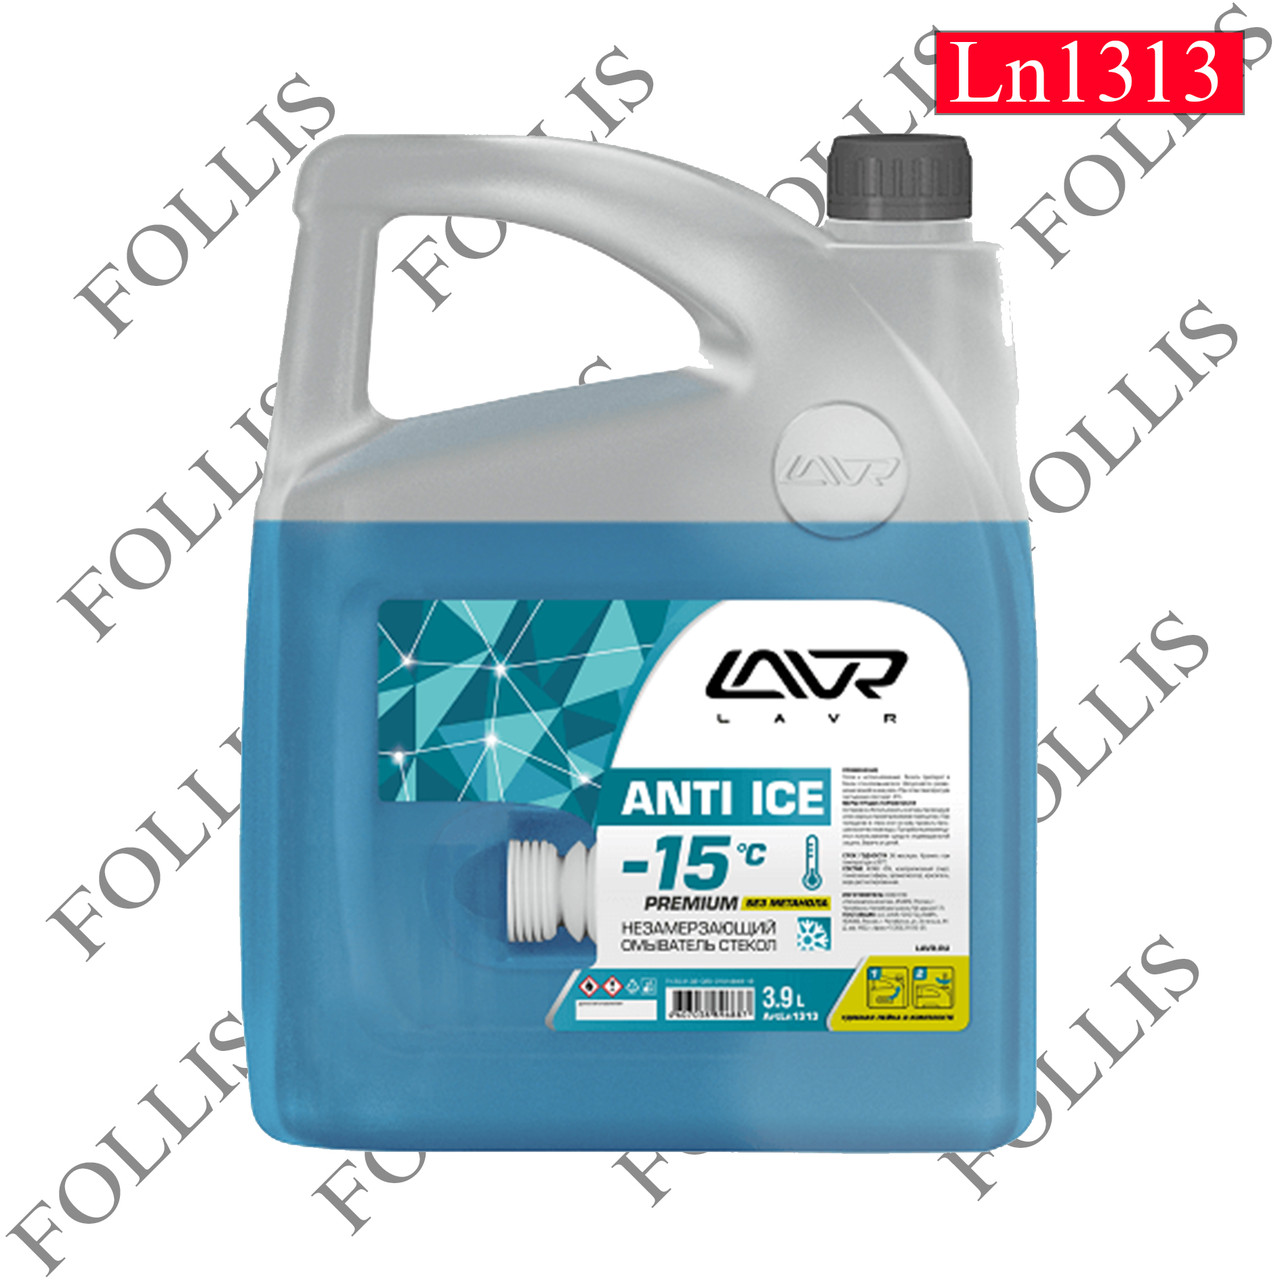 Незамерзающий омыватель стекол -15°С LAVR Anti-ice Premium 3,9 л